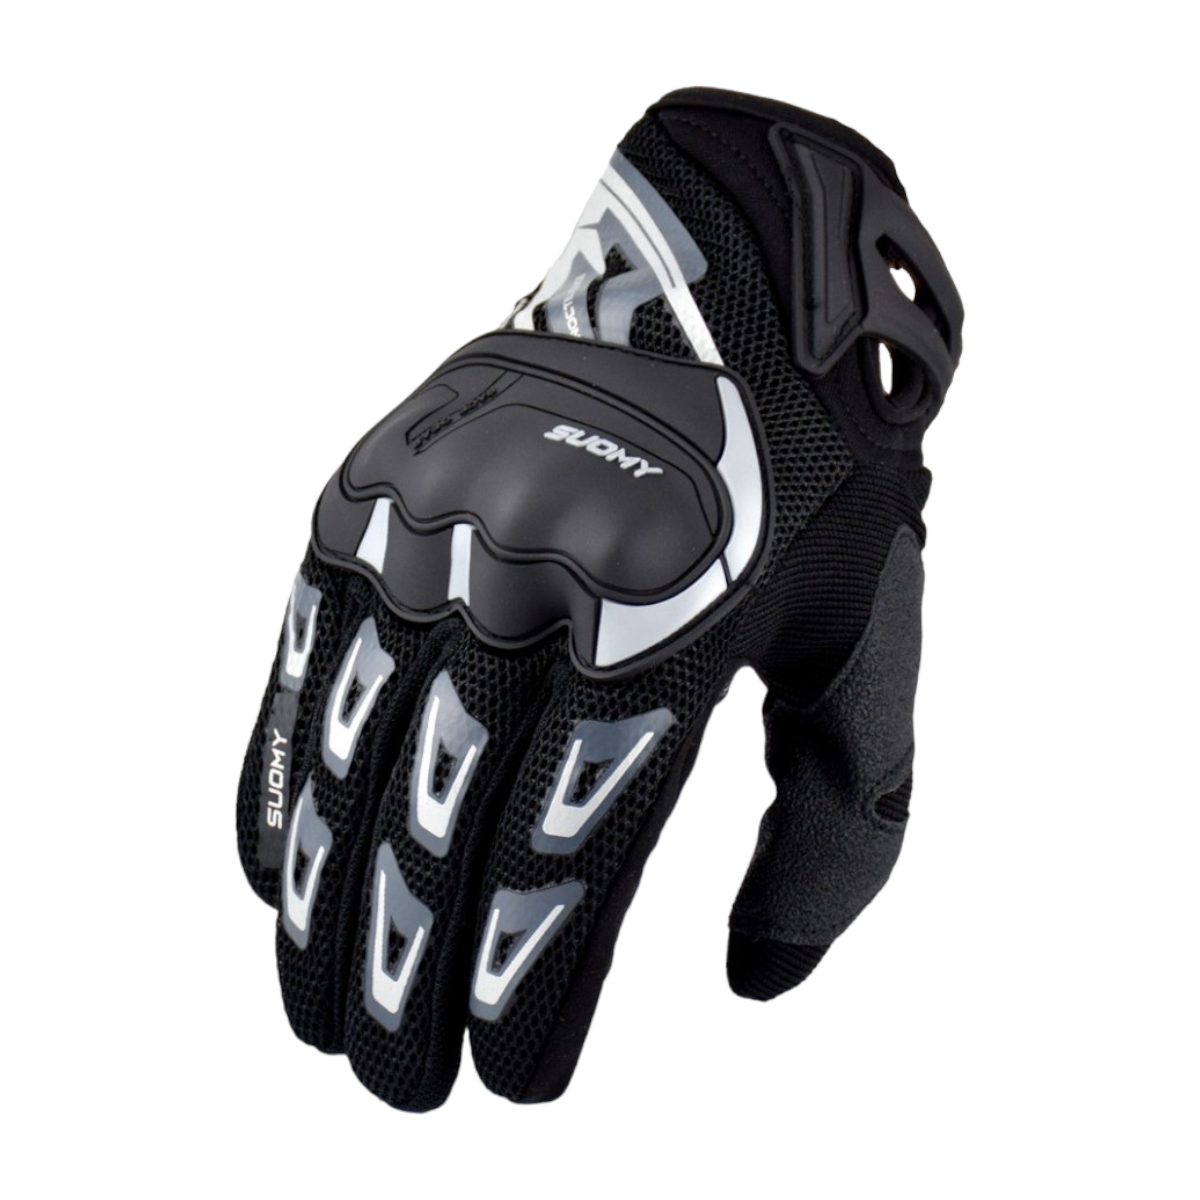 Мотоперчатки перчатки текстильные Suomy SU-11 для мотоциклиста на мотоцикл скутер мопед квадроцикл, черно-серые, 2XL